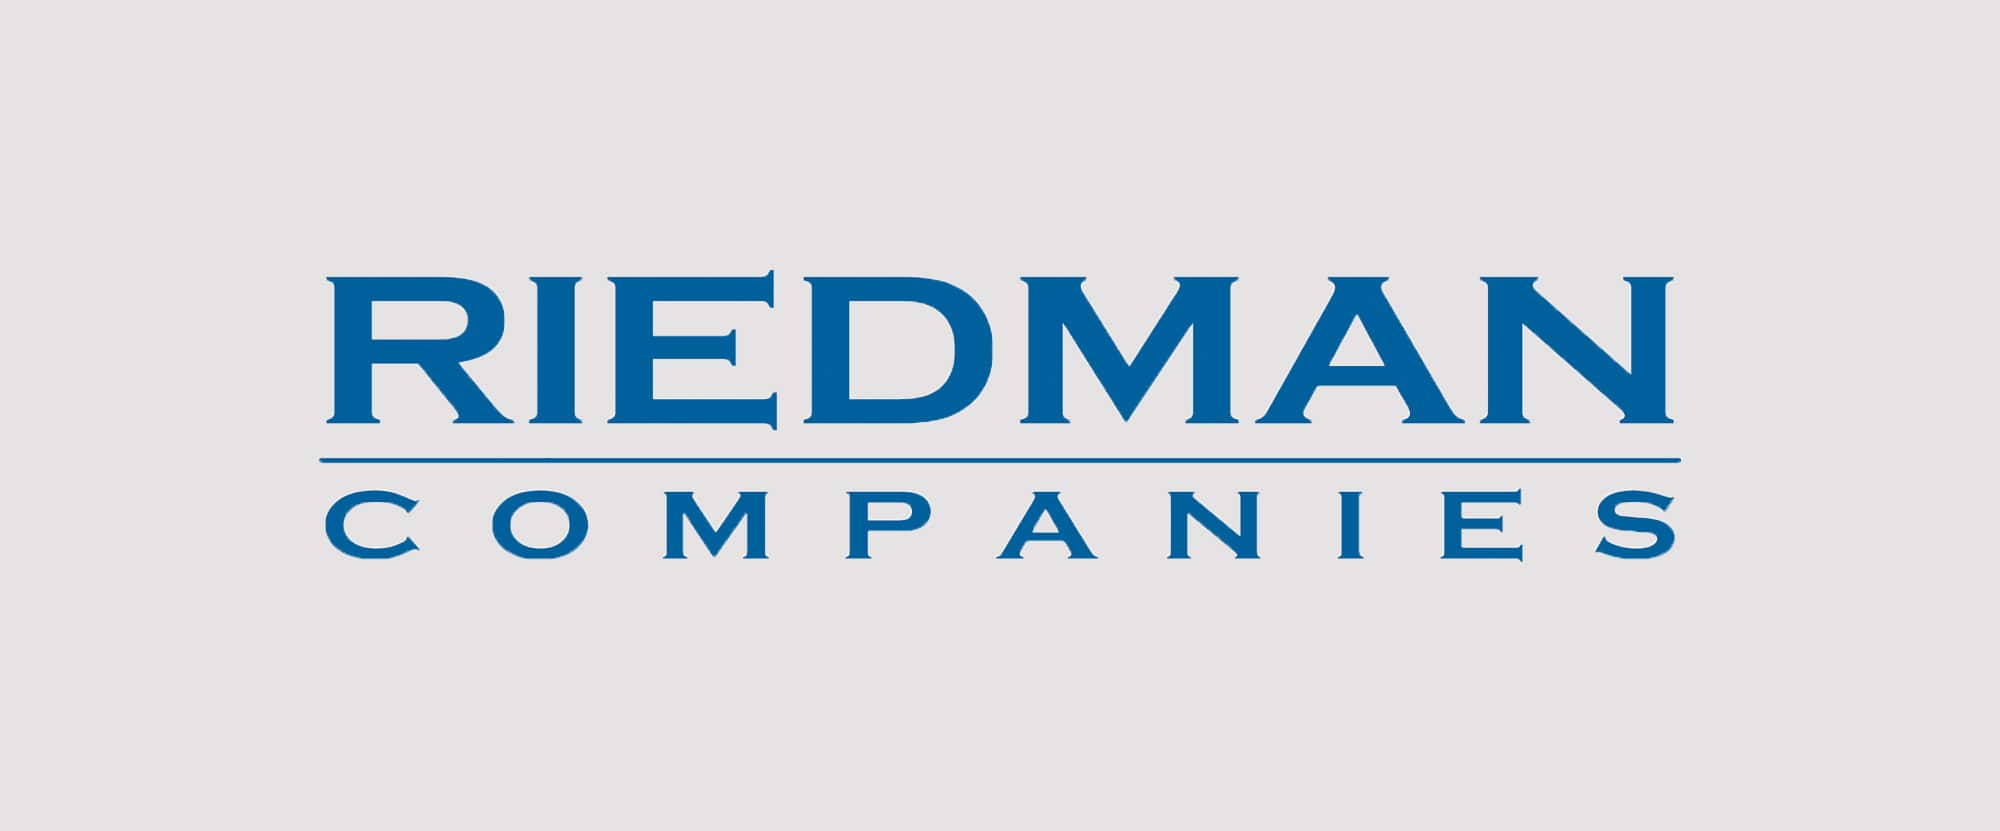 grey Riedman companies logo